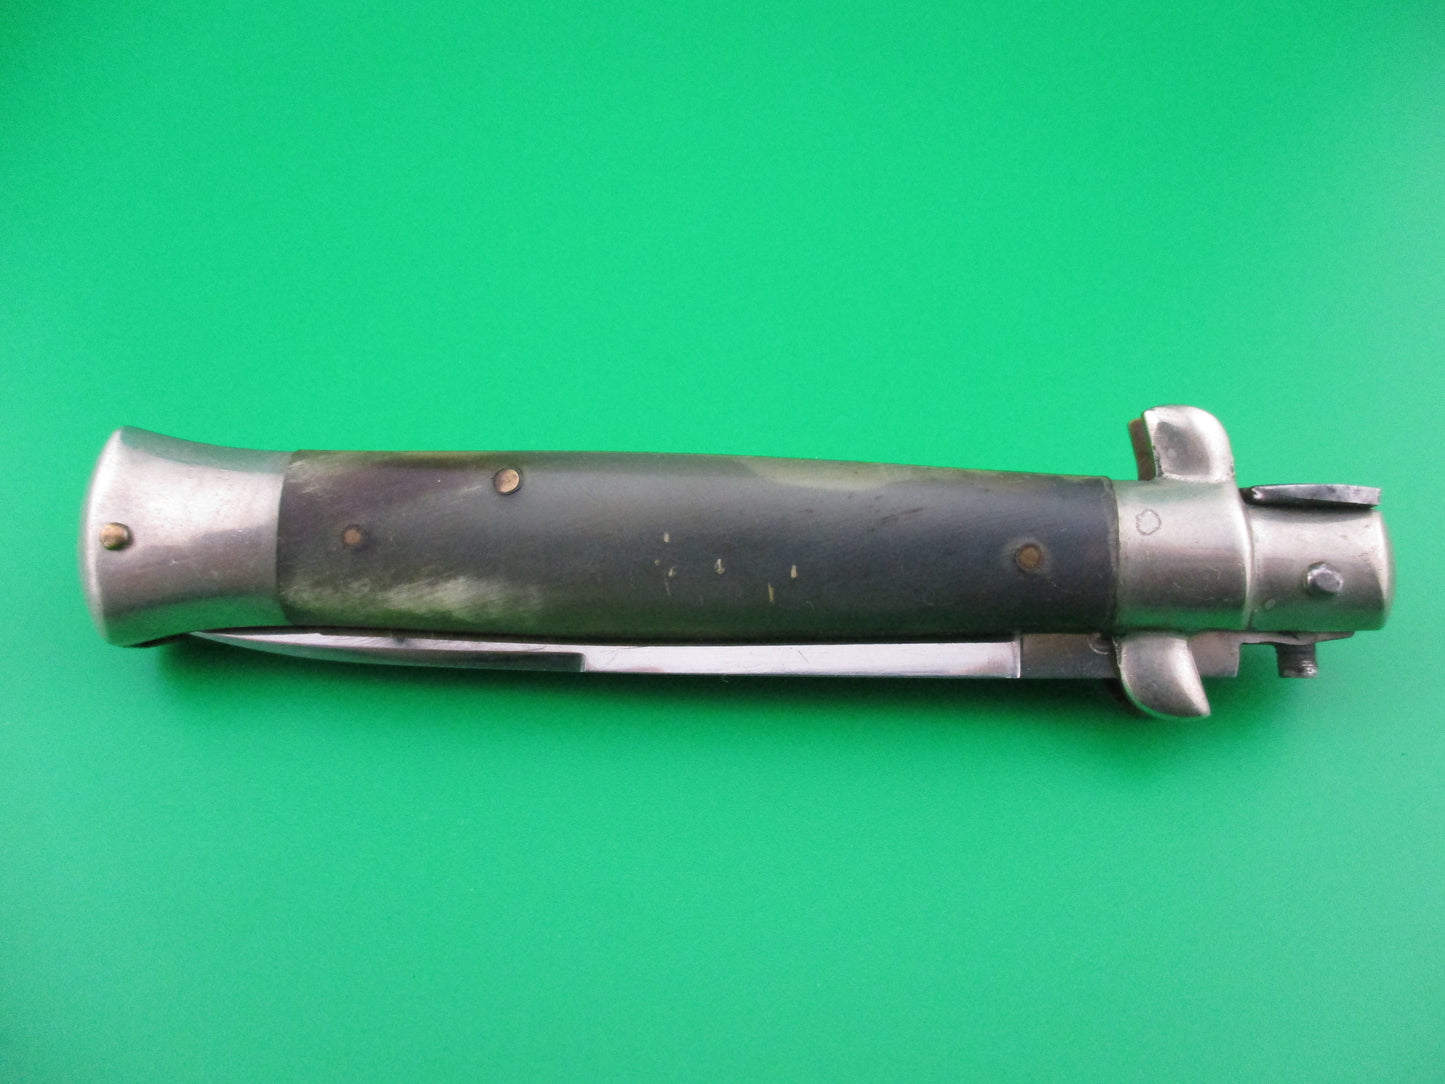 WANDY INOX 21cm Italian Transitional Stiletto automatic knife vintage 1960s